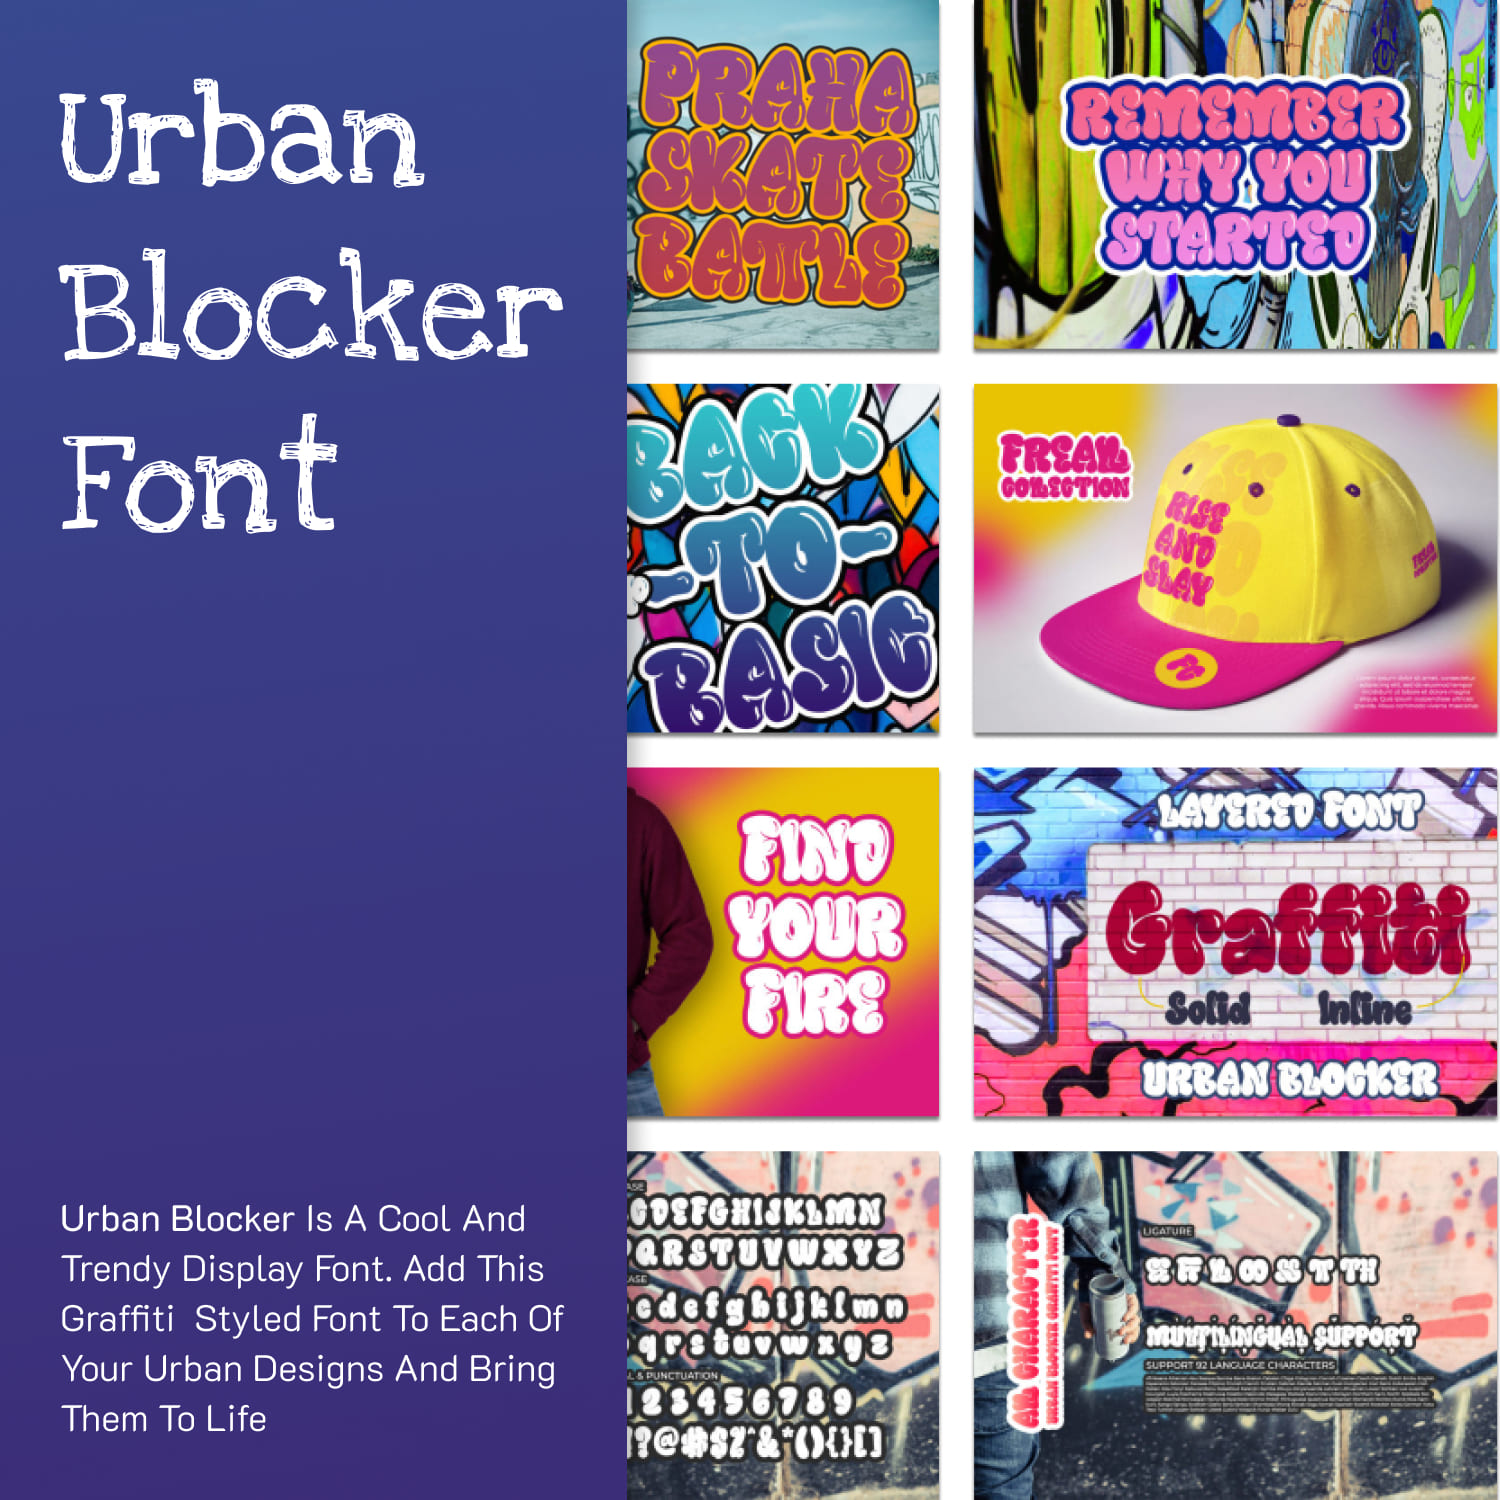 Urban Blocker Font.